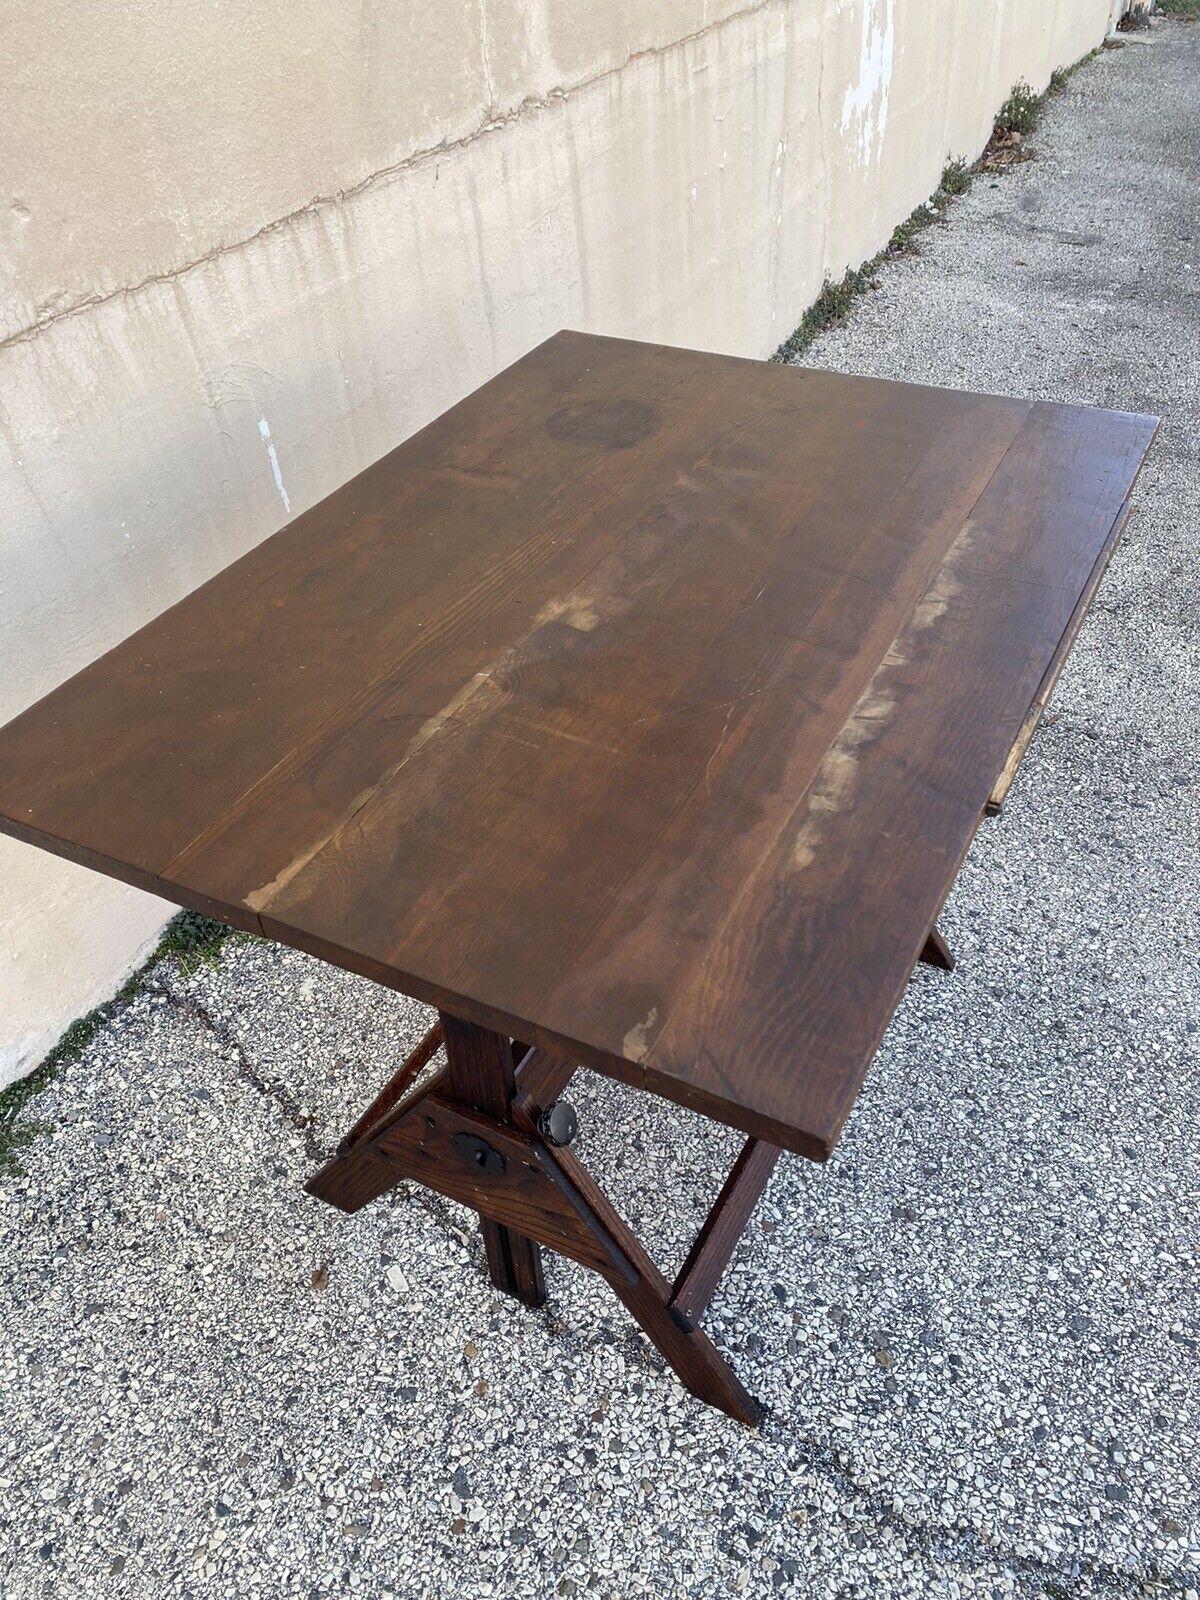 Vintage Anco Bilt Oak Wood Adjustable Drafting Table Desk Industrial Work Stand 4